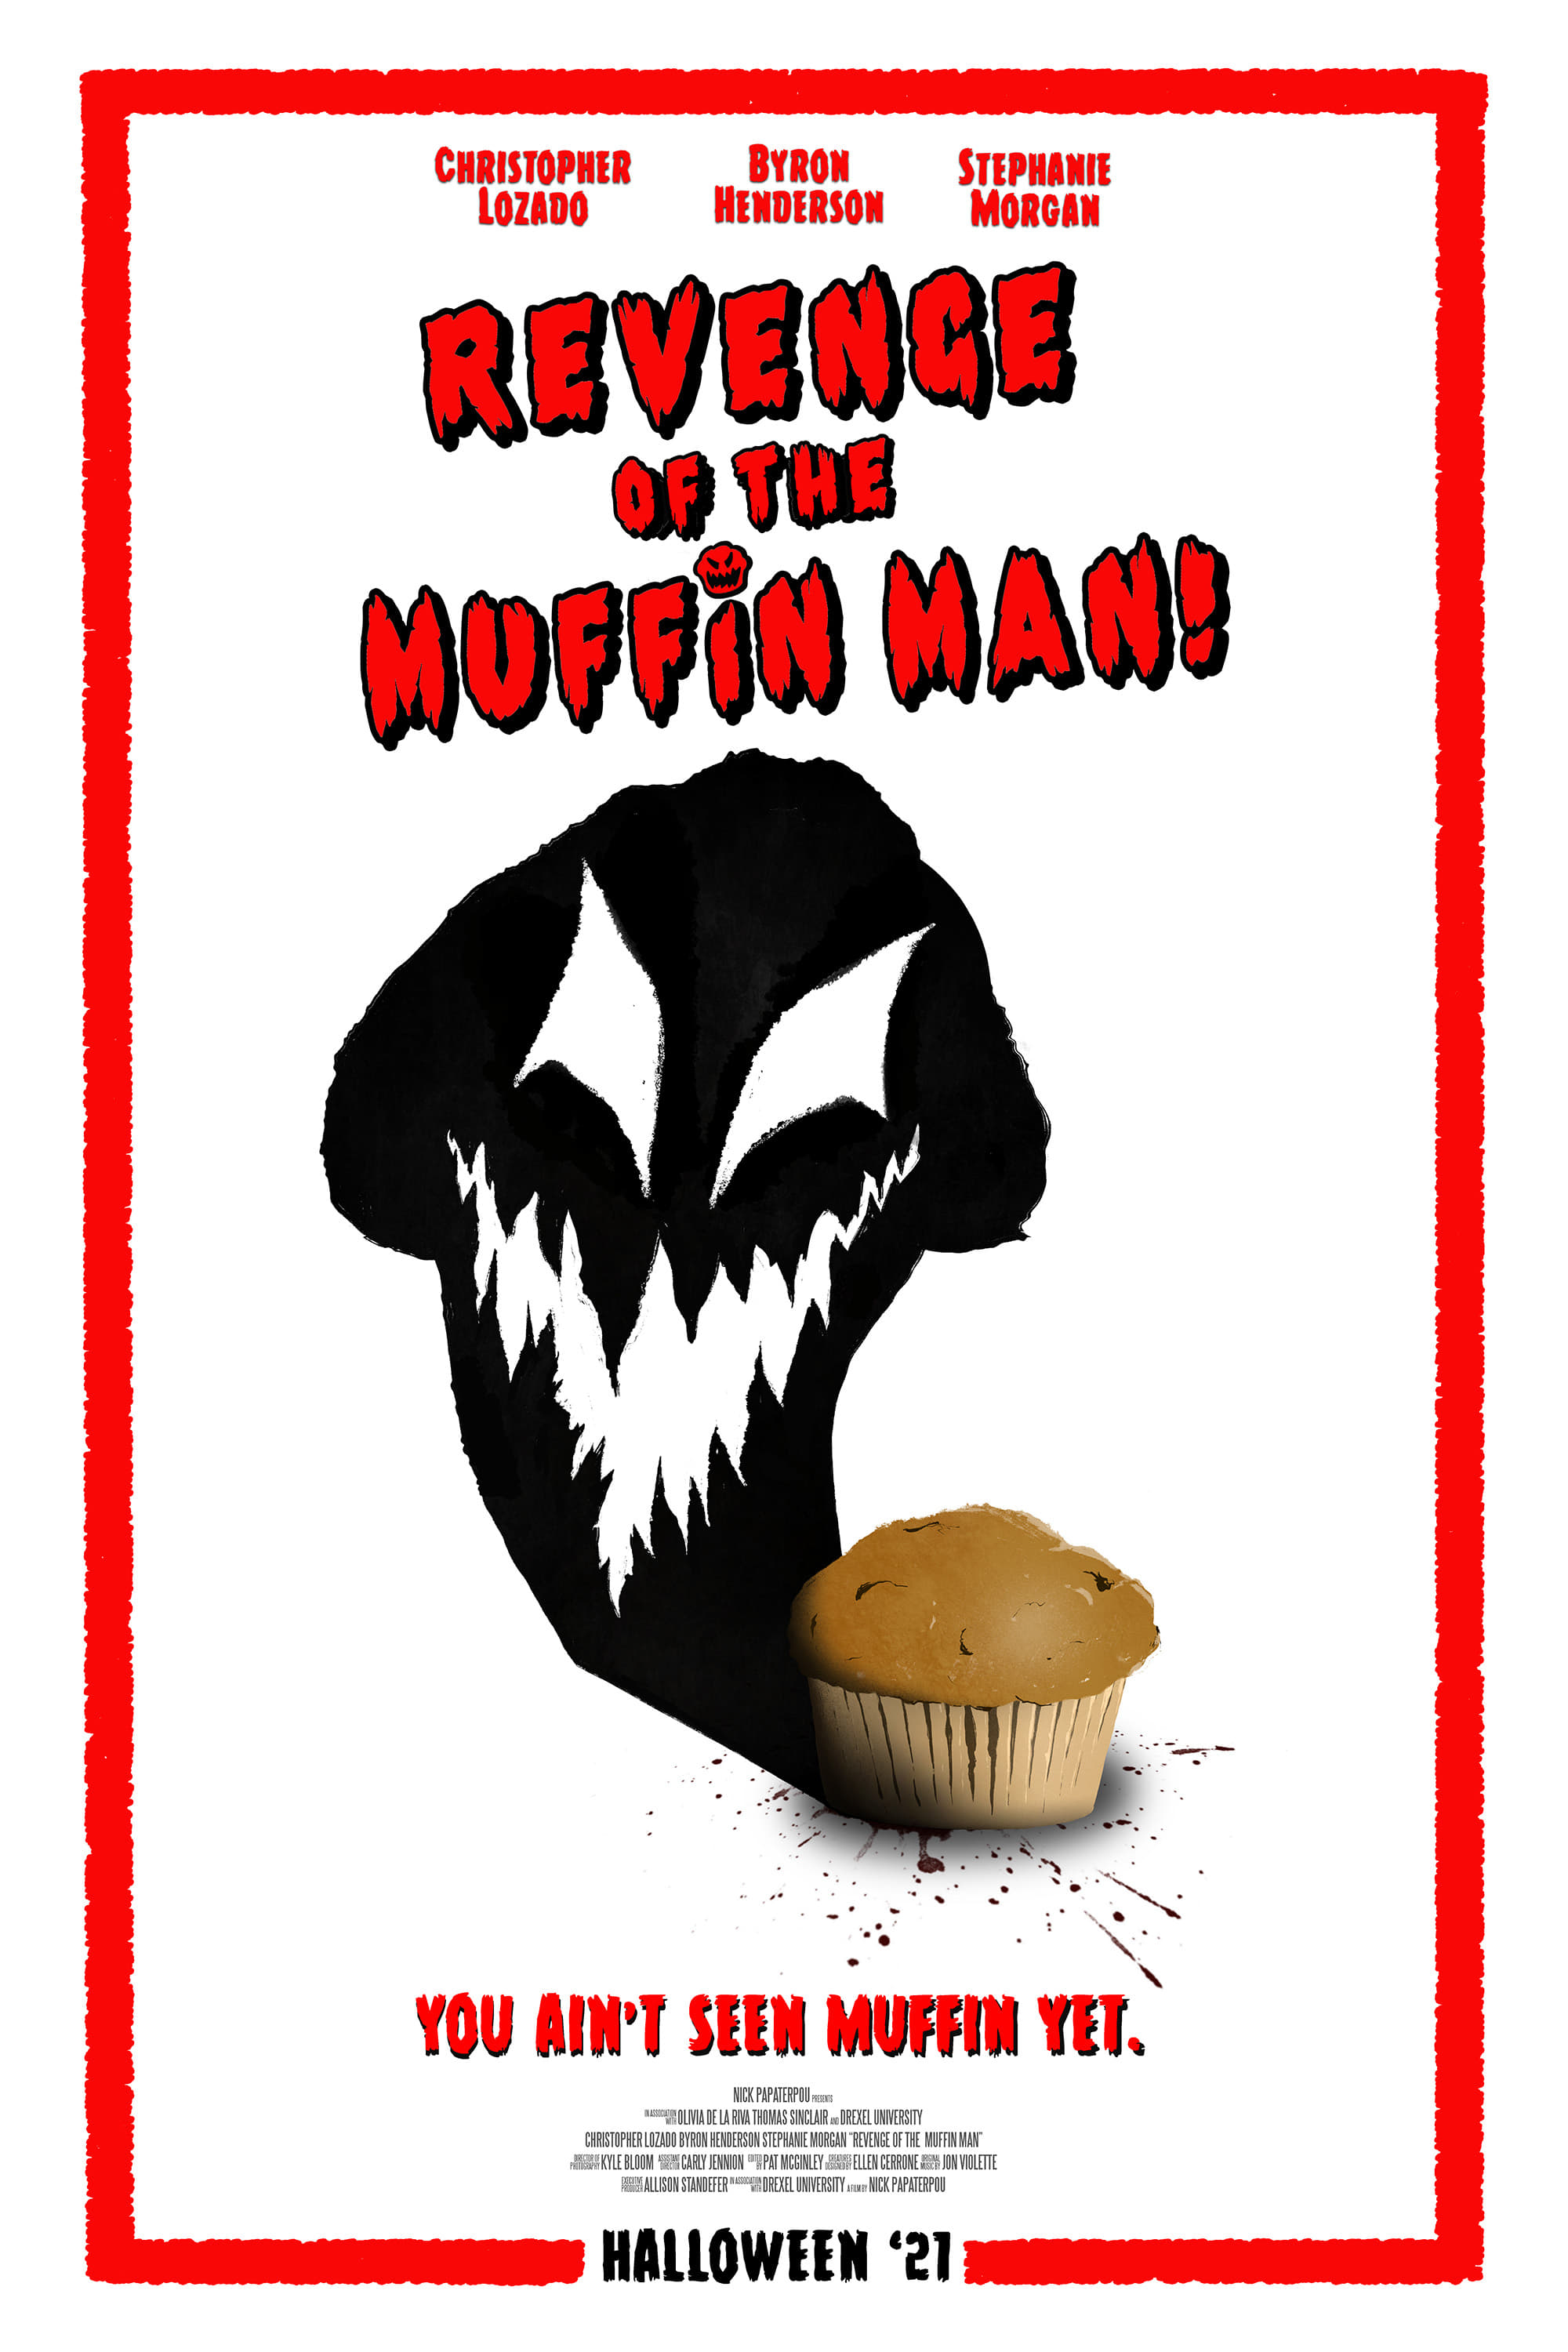 Revenge of the Muffin Man